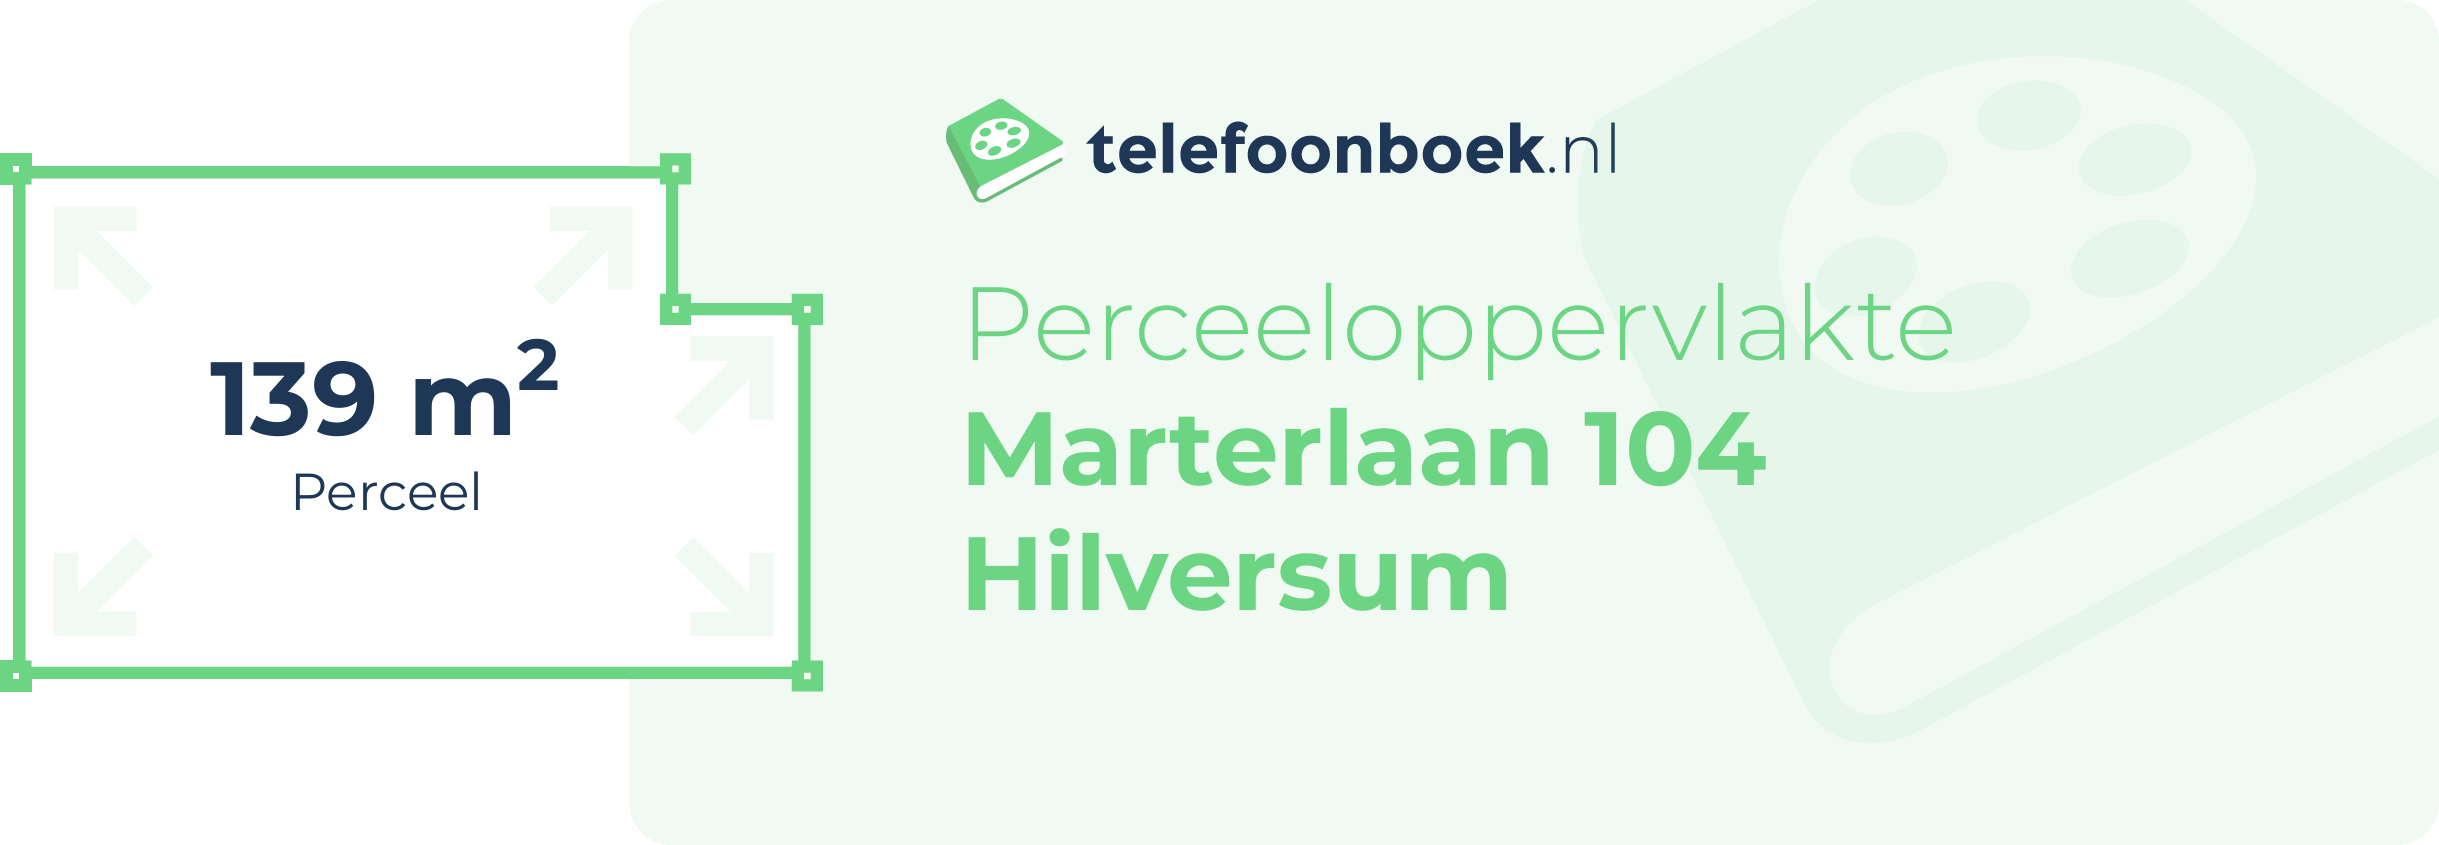 Perceeloppervlakte Marterlaan 104 Hilversum